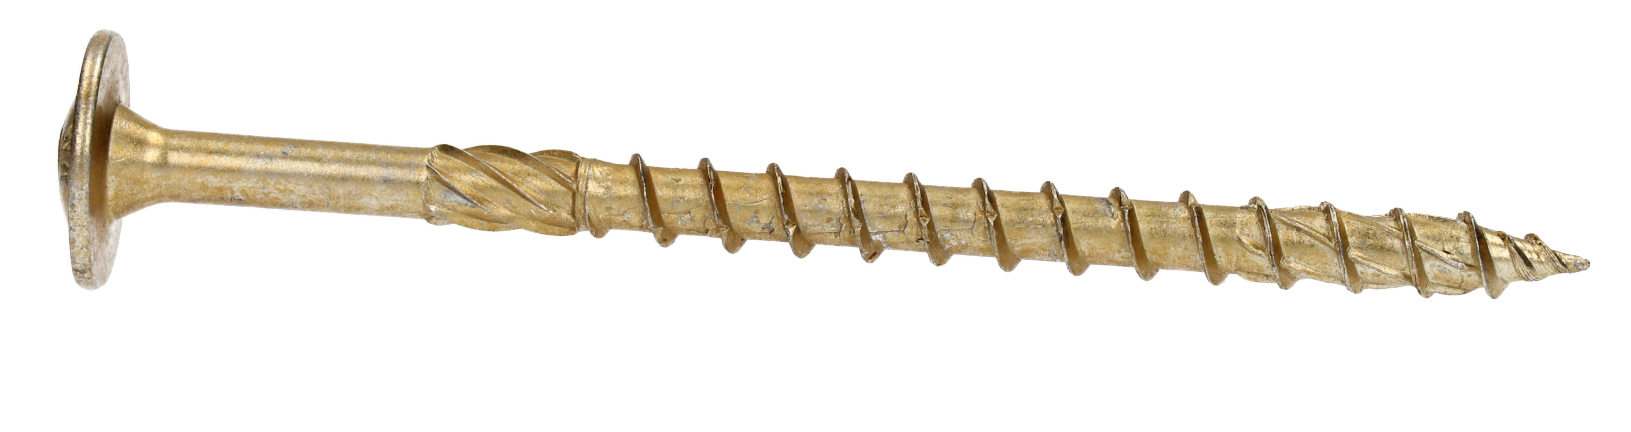 KLIMAS Wkret-met konštrukčná skrutka do dreva s tanierovou hlavou WKCP TX40 Ø8 mm